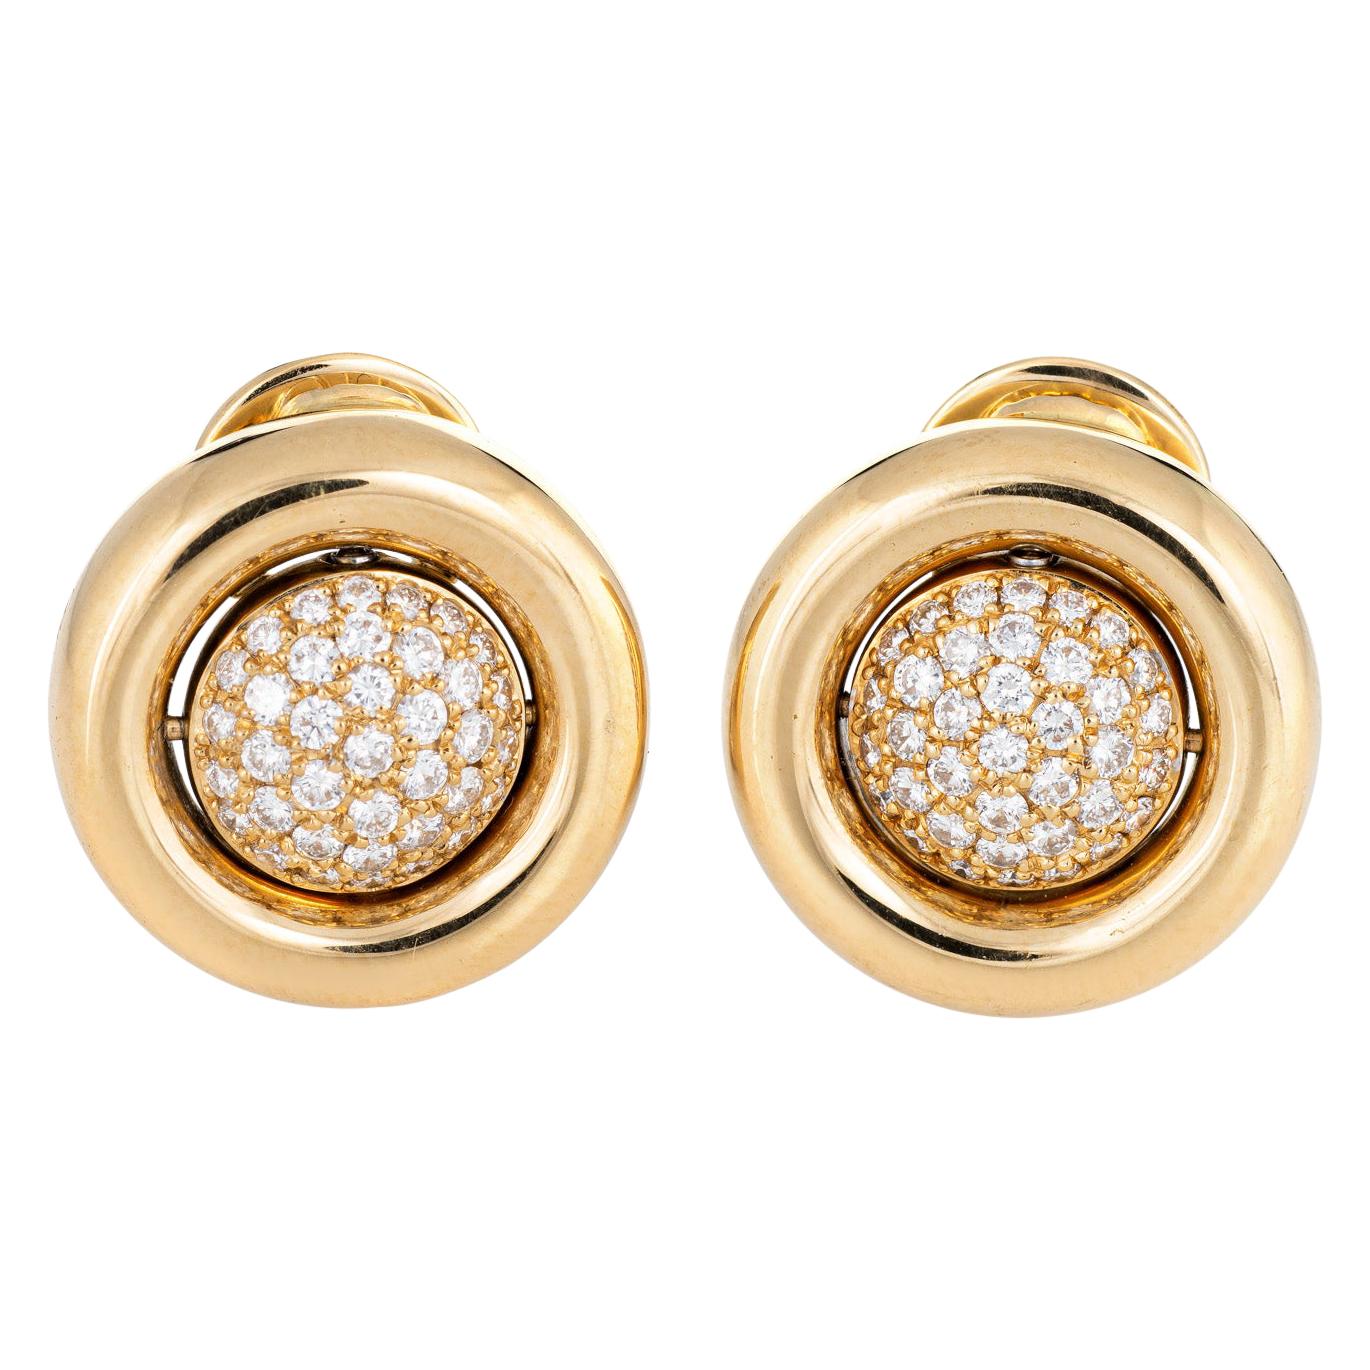 Chopard Diamond Earrings Movable Day Night 18 Karat Yellow Gold Estate Jewelry